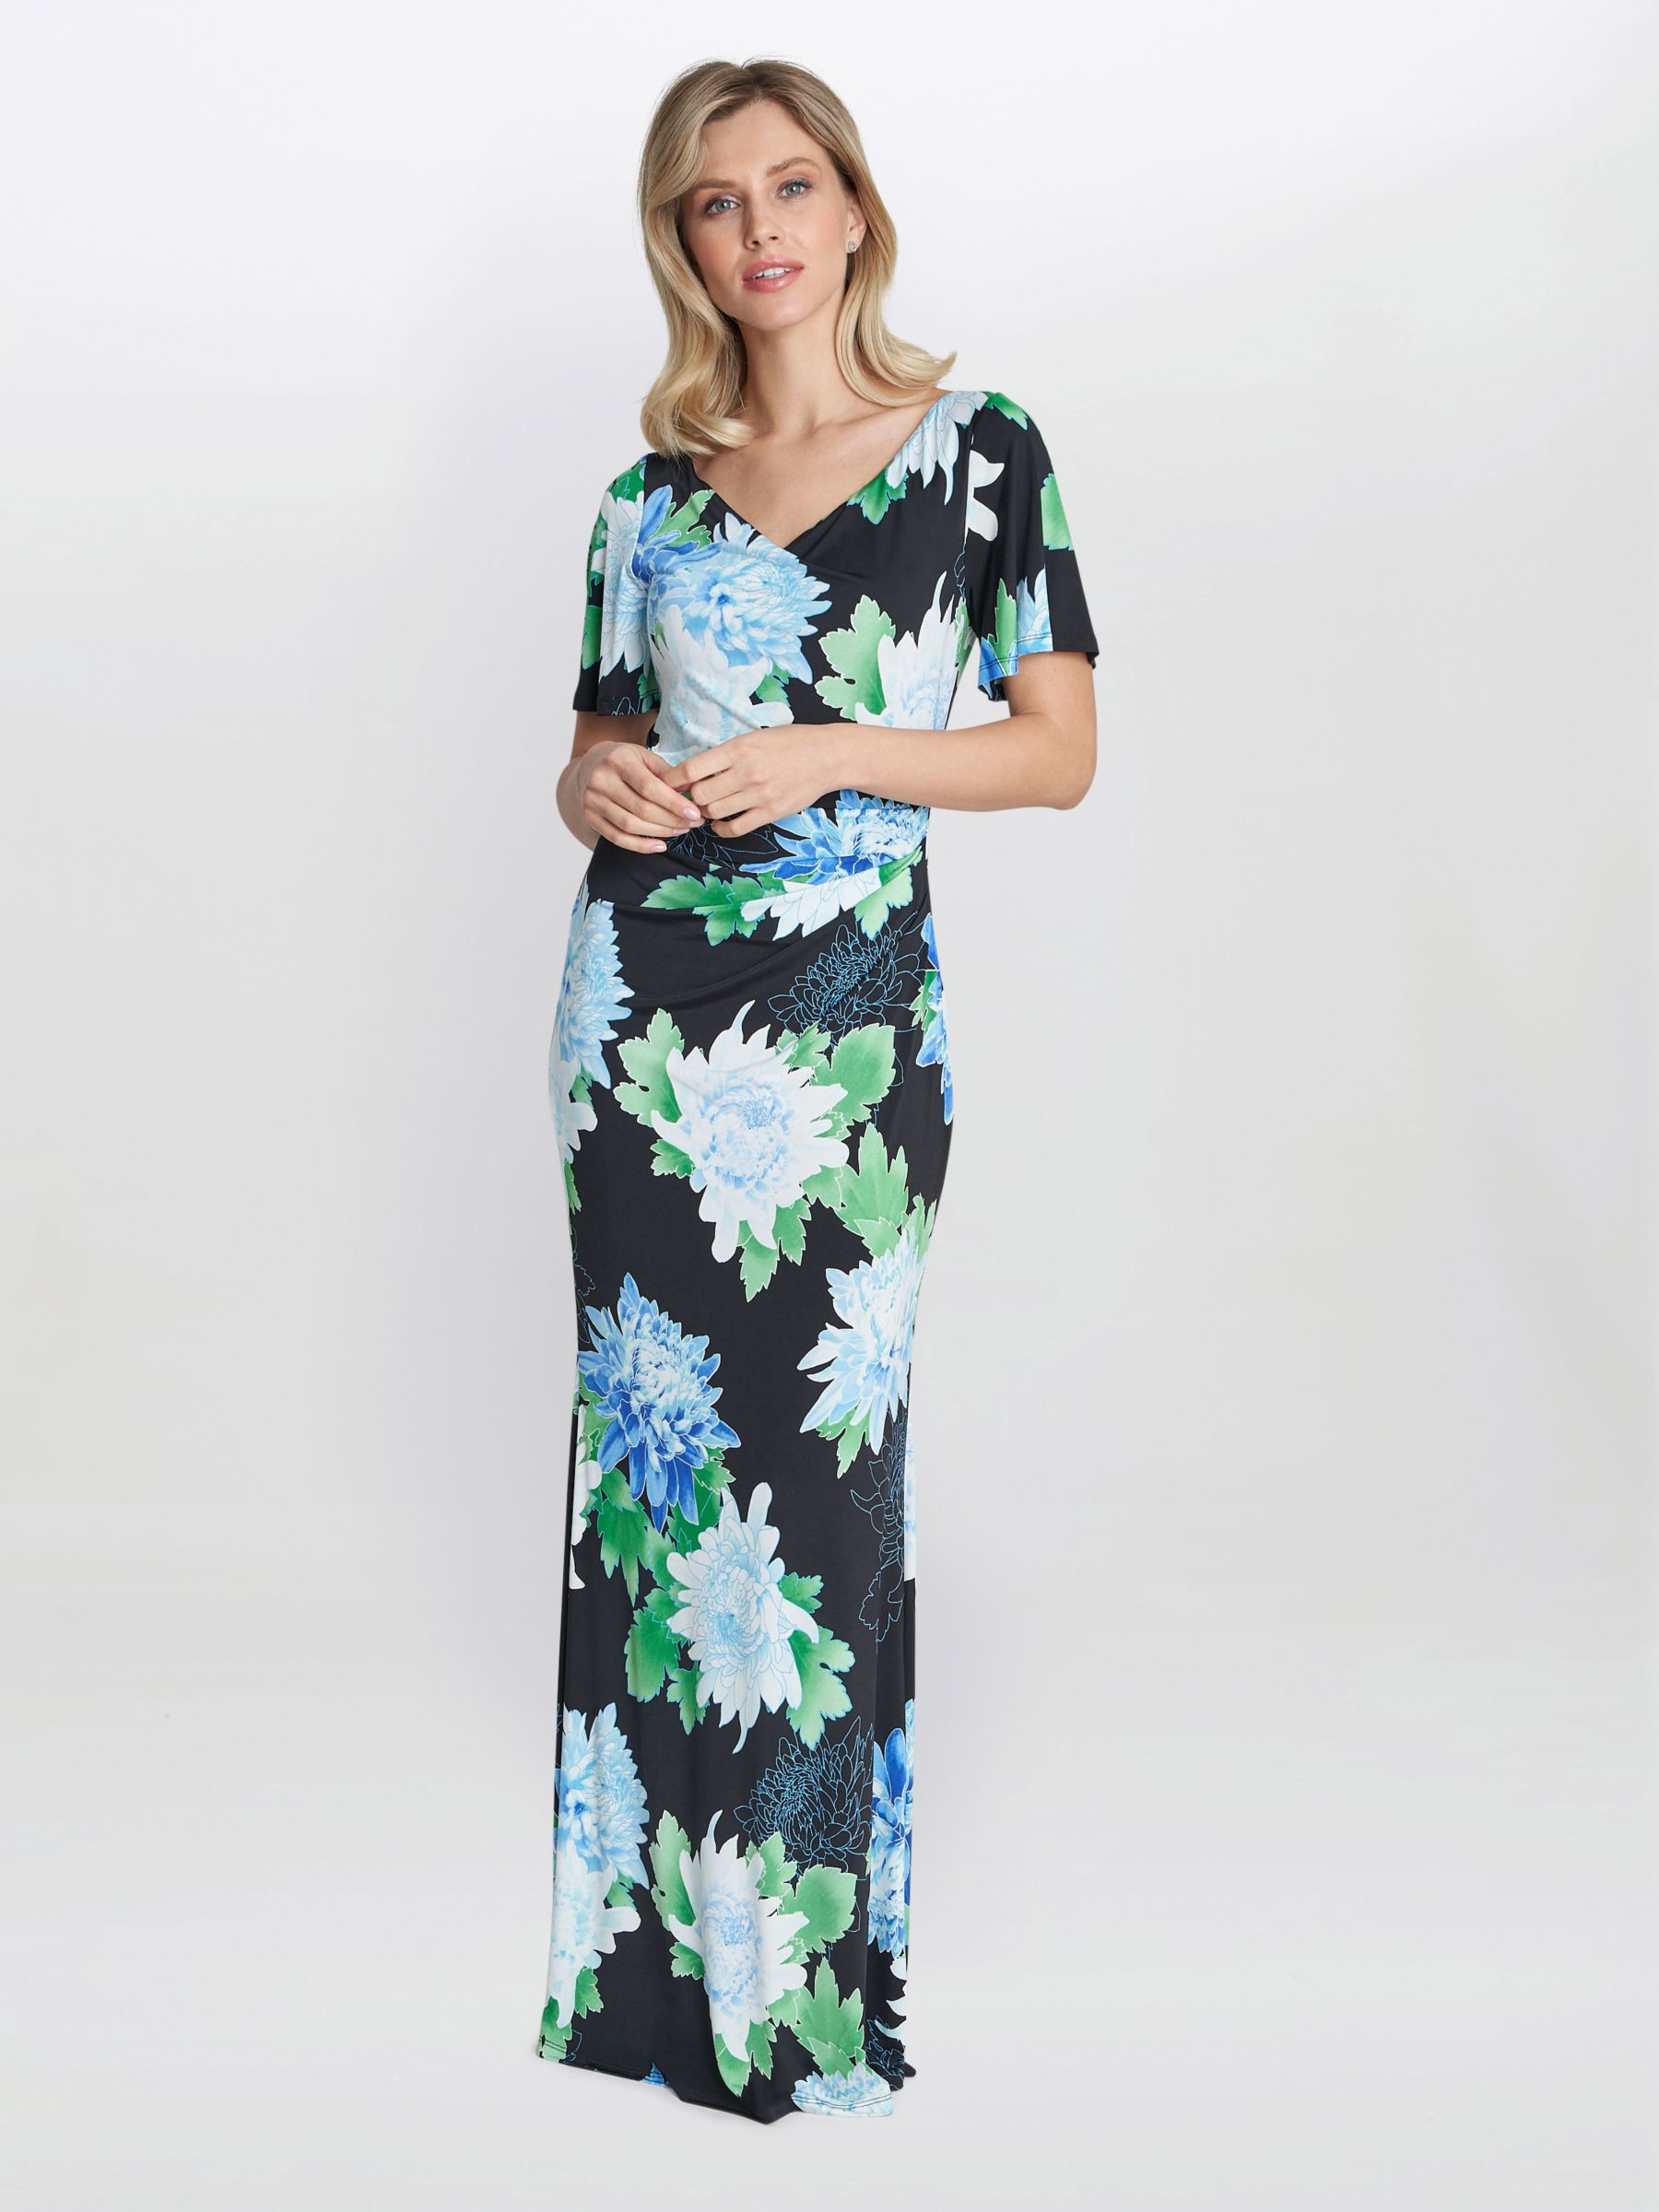 Gina Bacconi Jaylene Floral Maxi Dress, Navy/Green at John Lewis & Partners